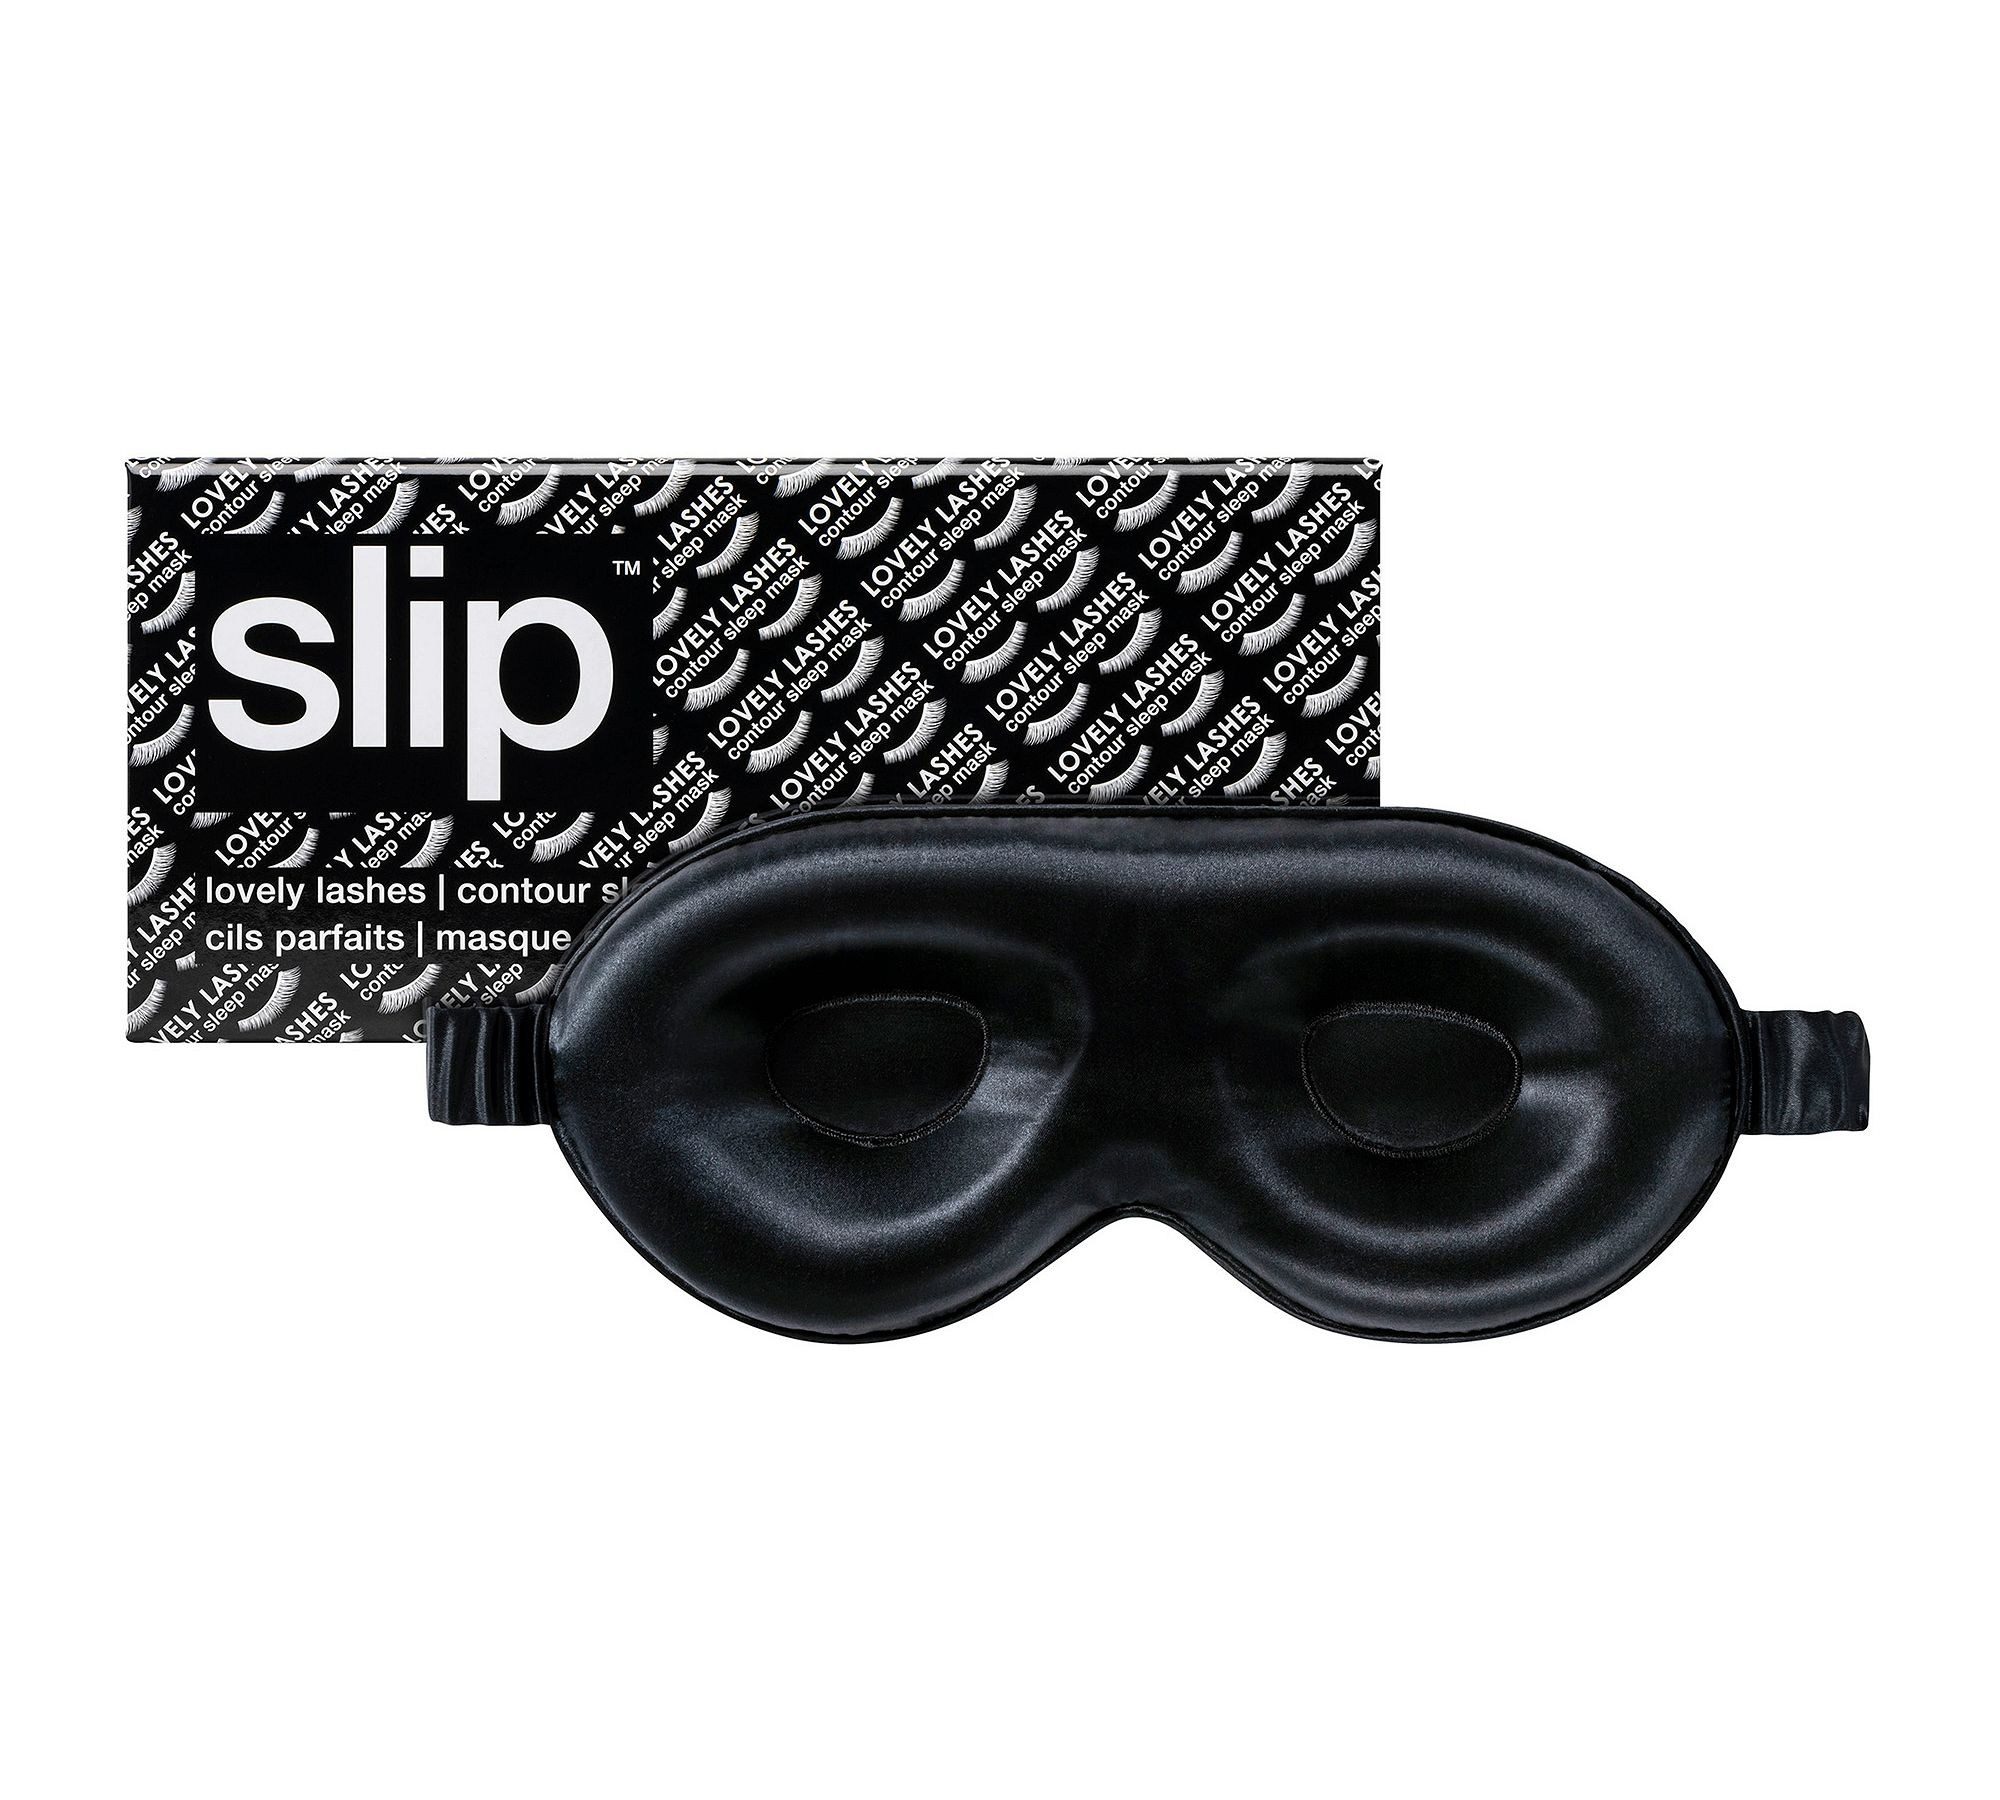 Slip Pure Silk Contour Sleep Mask